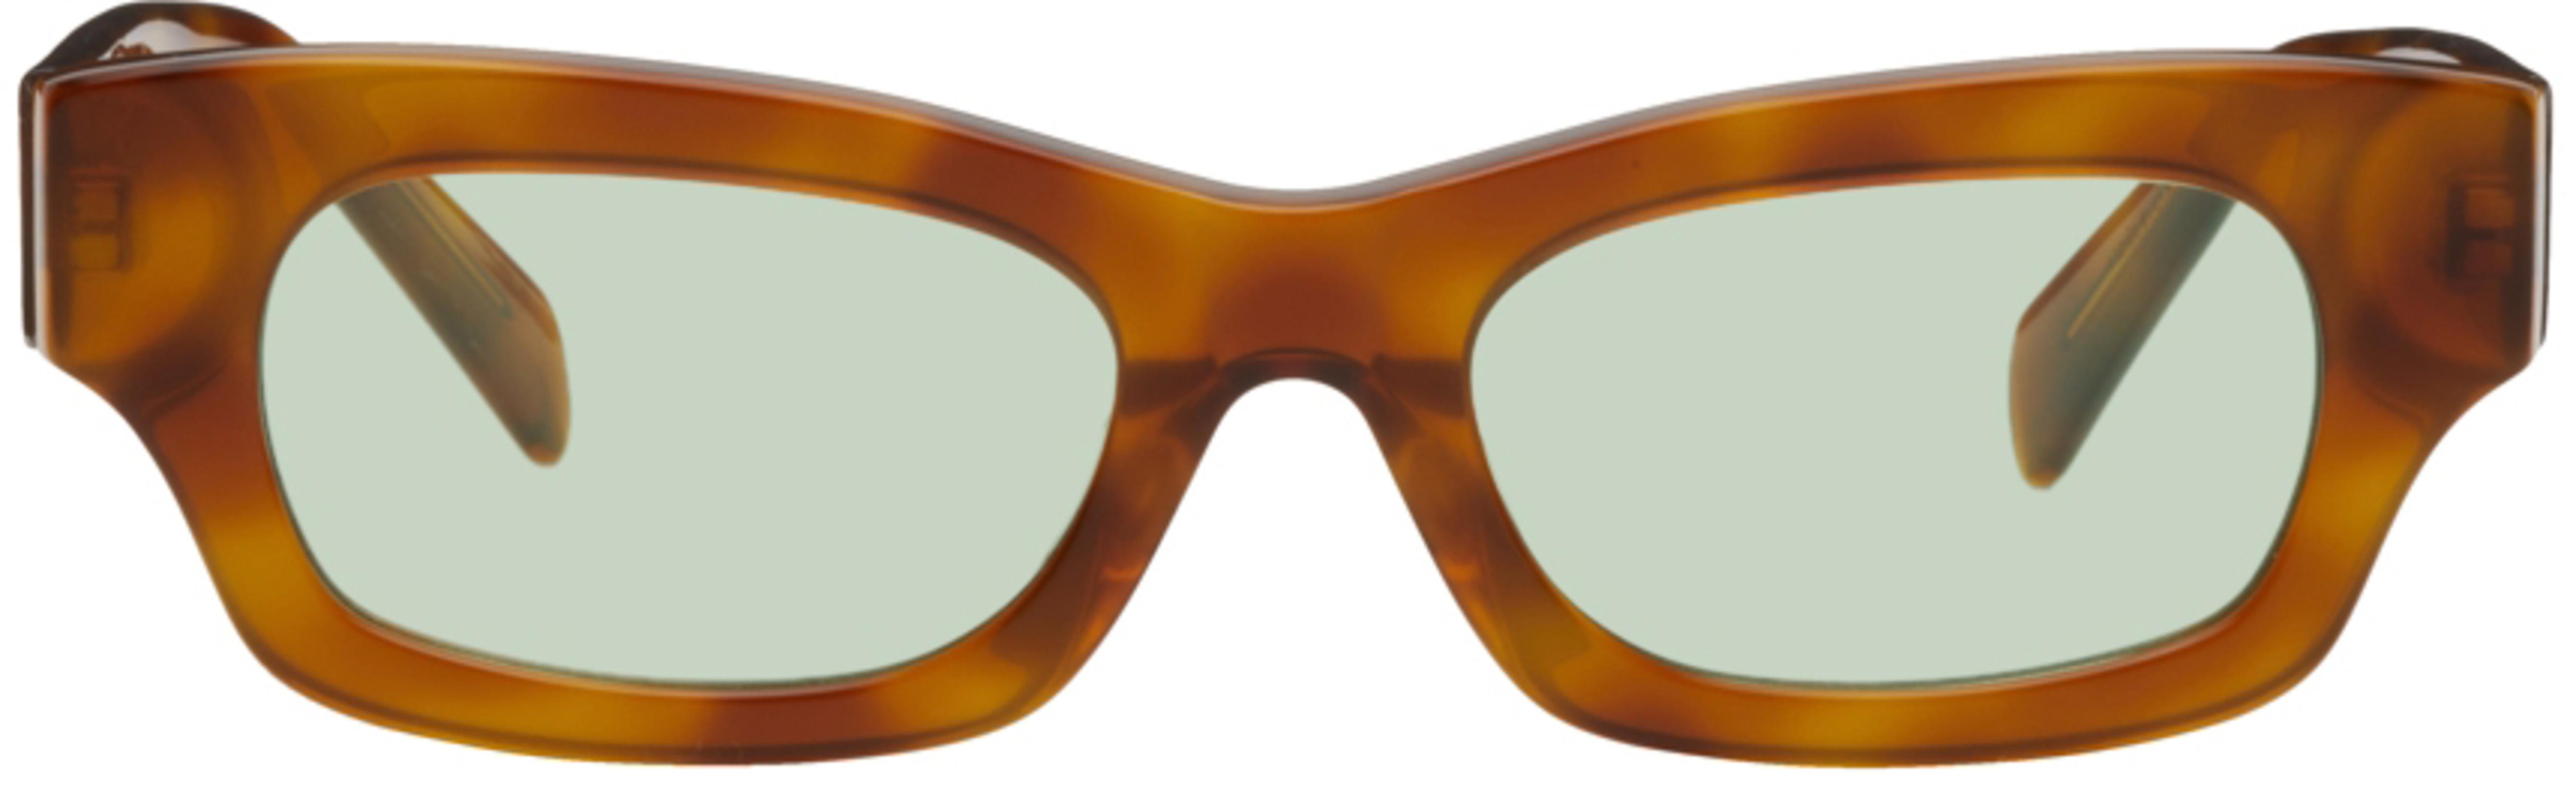 Tortoiseshell Tomboy Sunglasses by BONNIE CLYDE